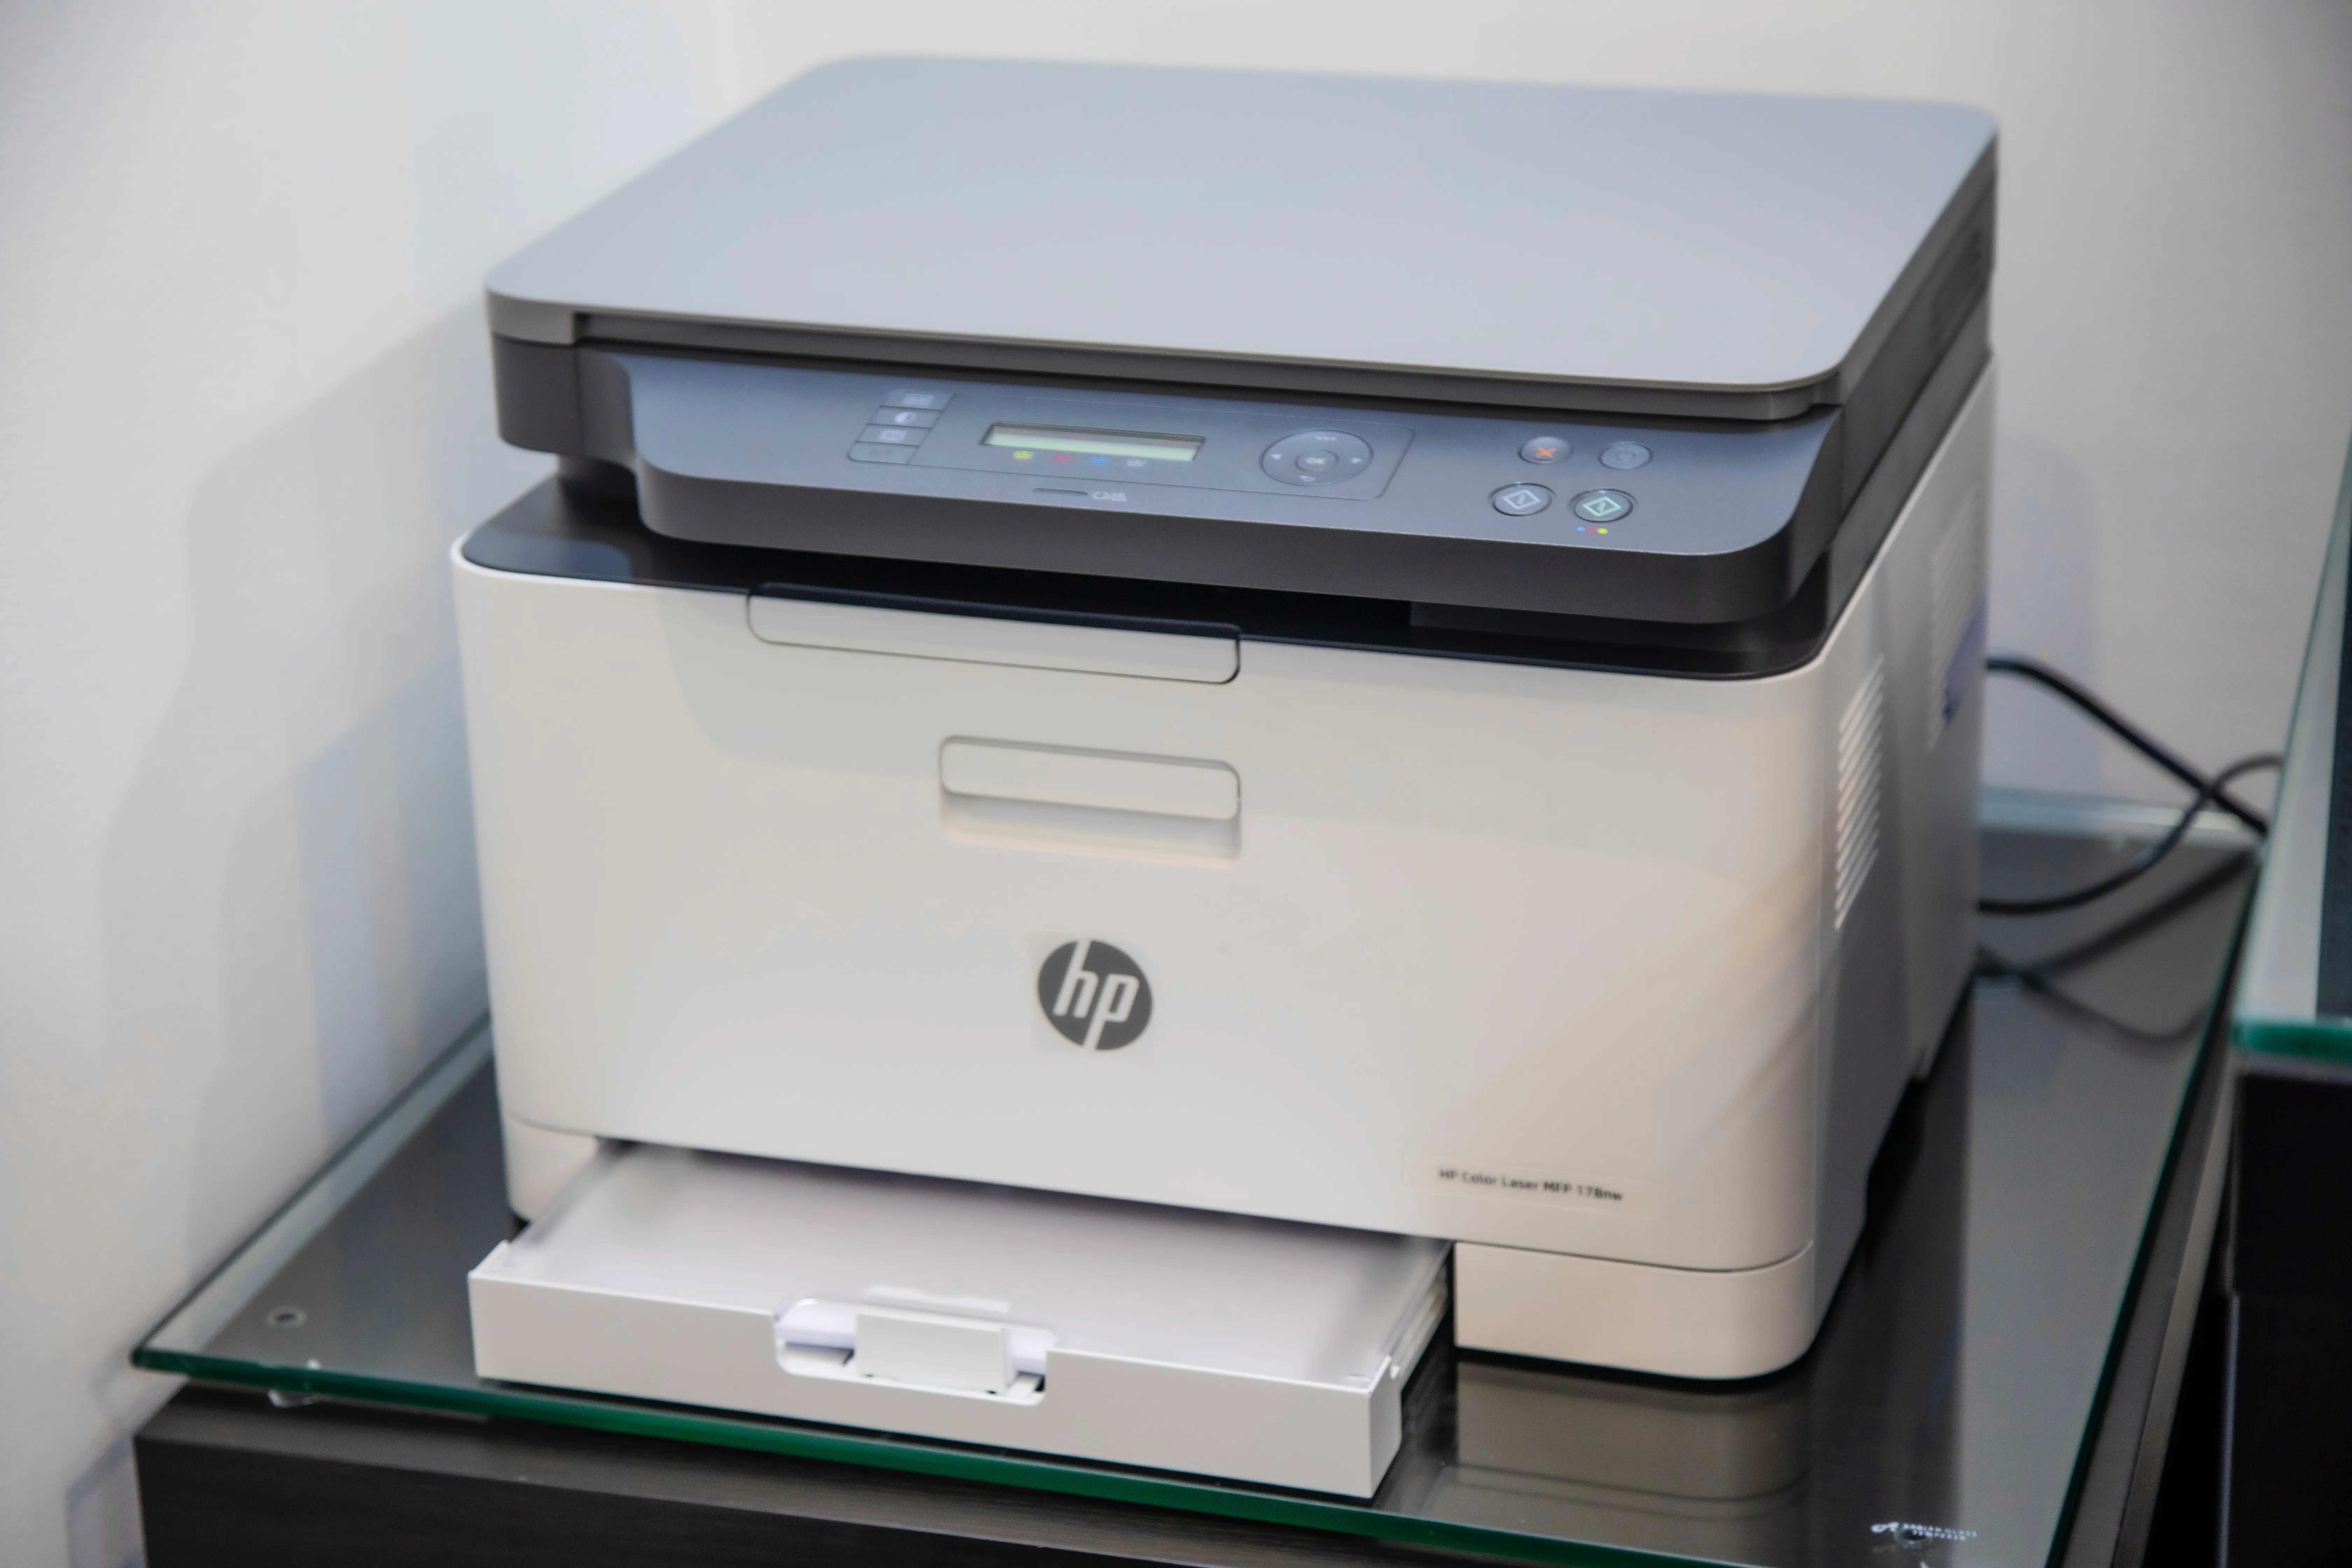 HP printer in office